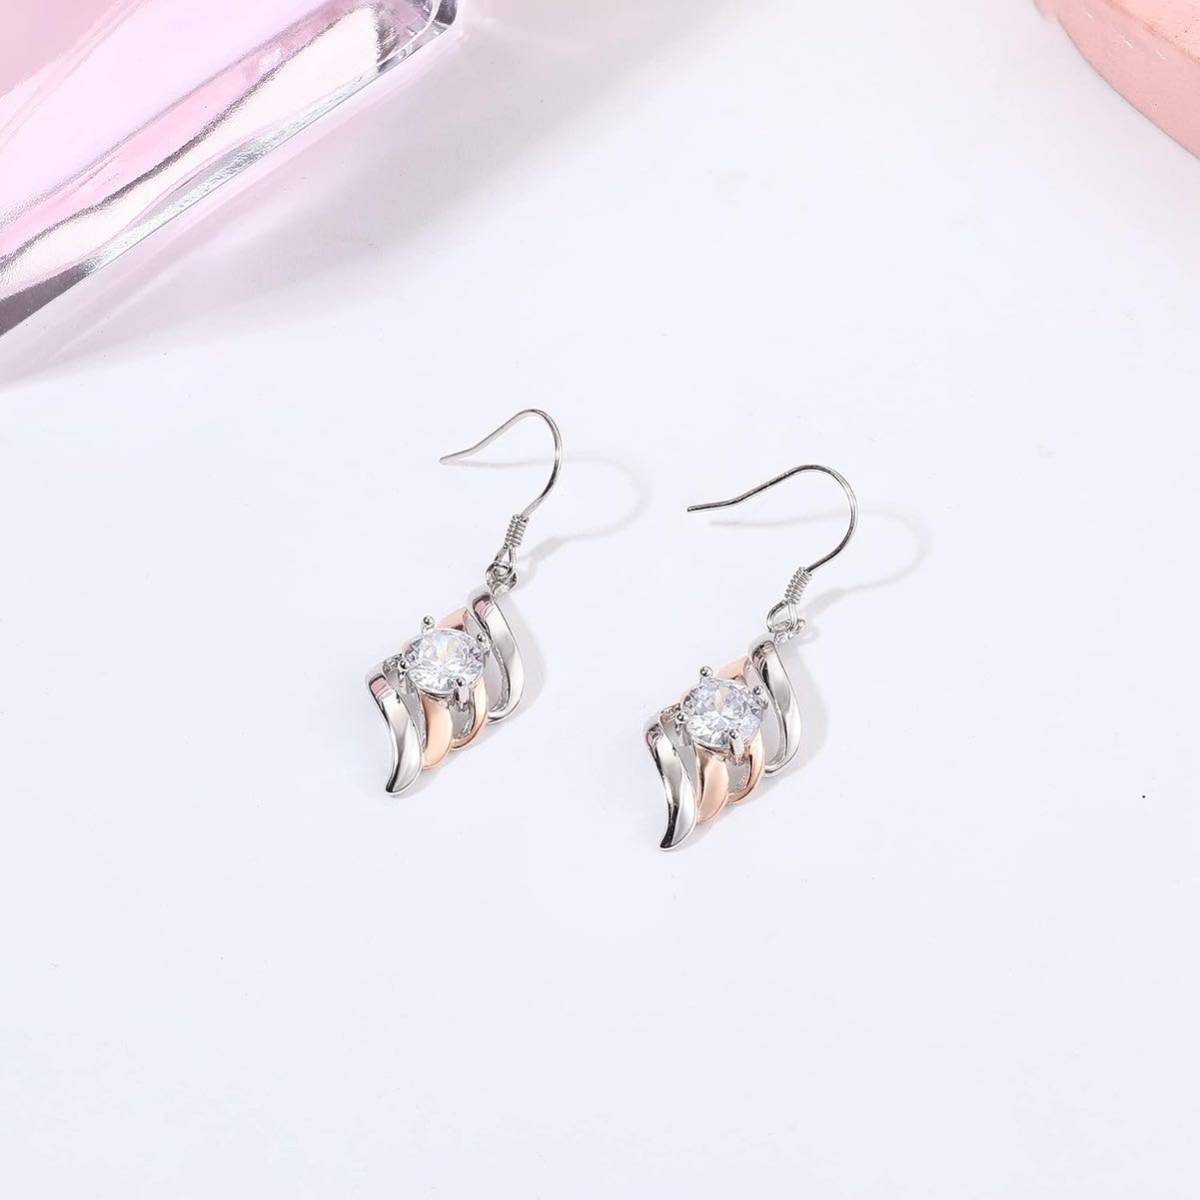  earrings hook earrings lady's 5A zirconia silver 925 platinum plating metal allergy correspondence pink go Roo do